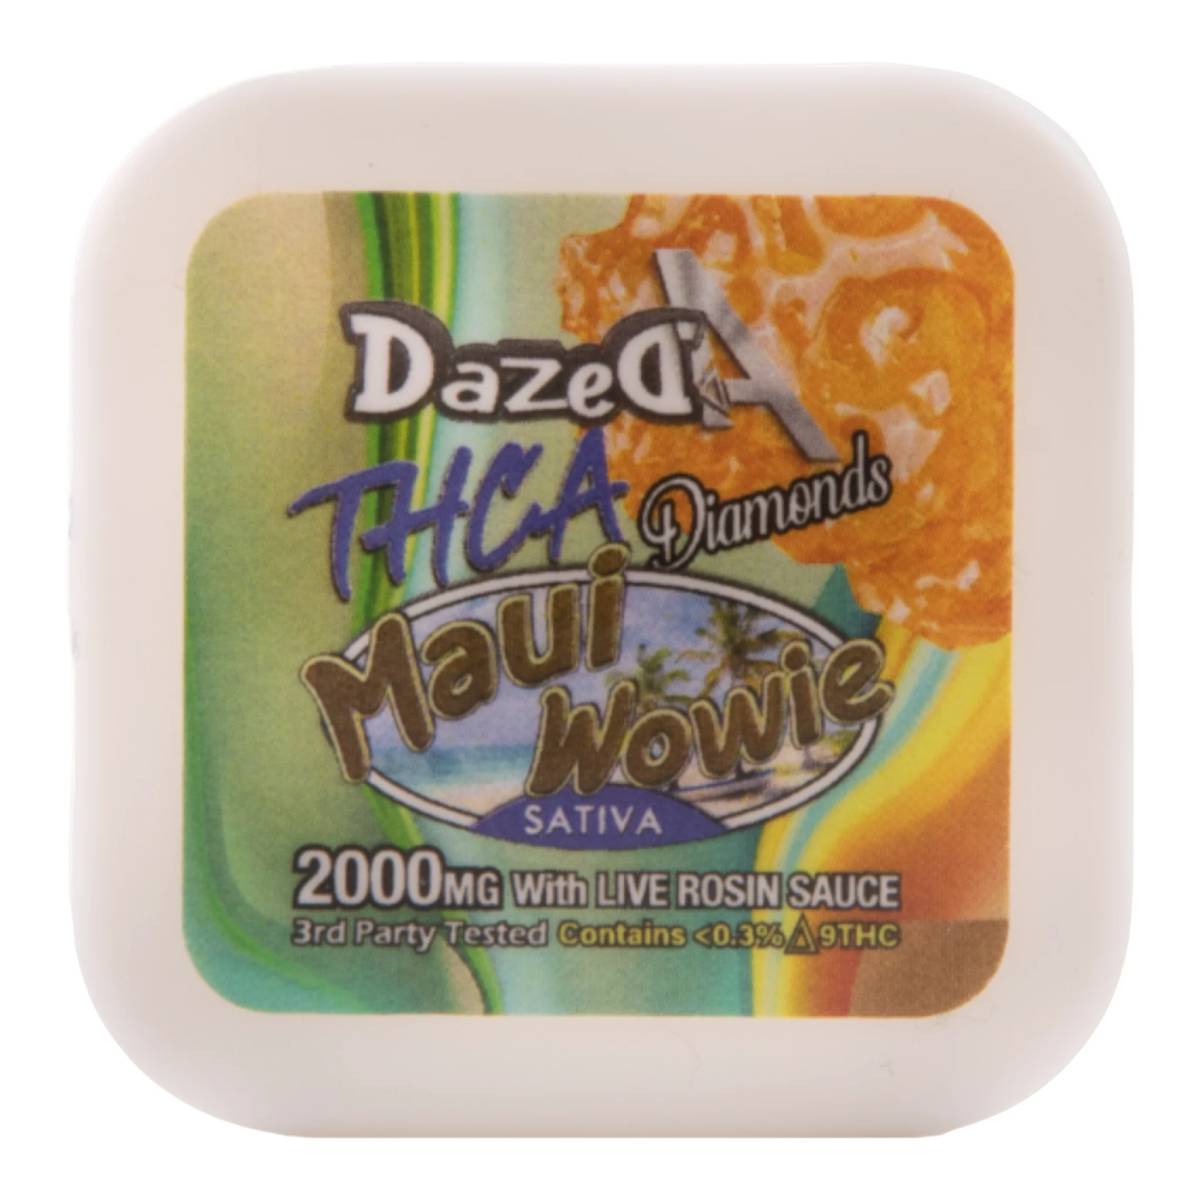 DazedA THC-A Diamond Dabs (2g) maui.